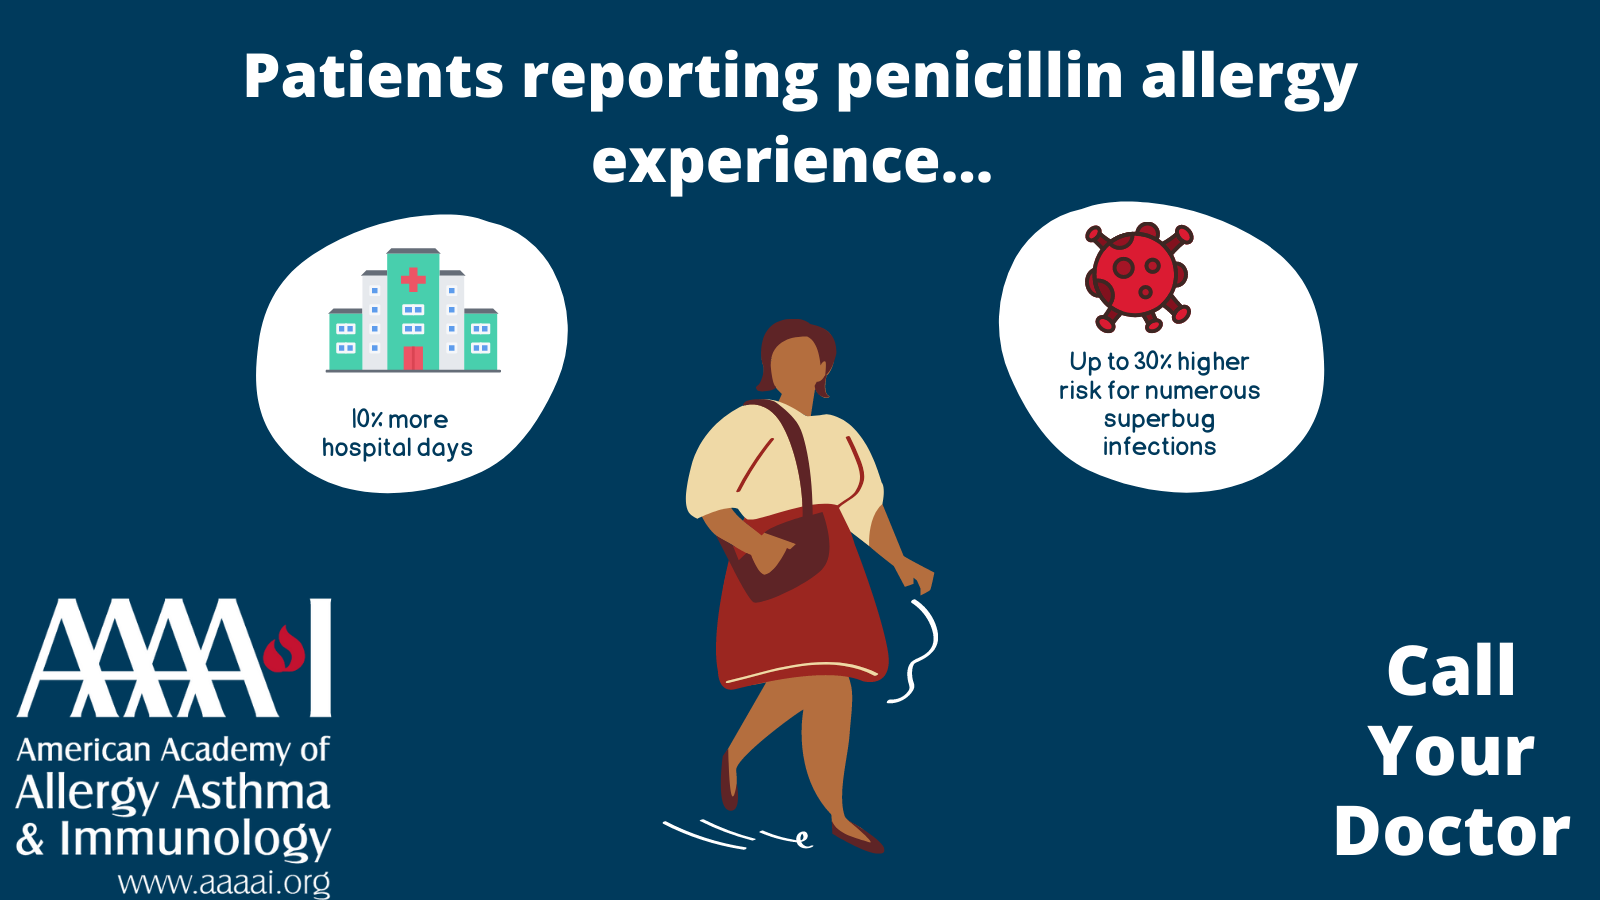 Penicillin Allergy Center Aaaai Education Center